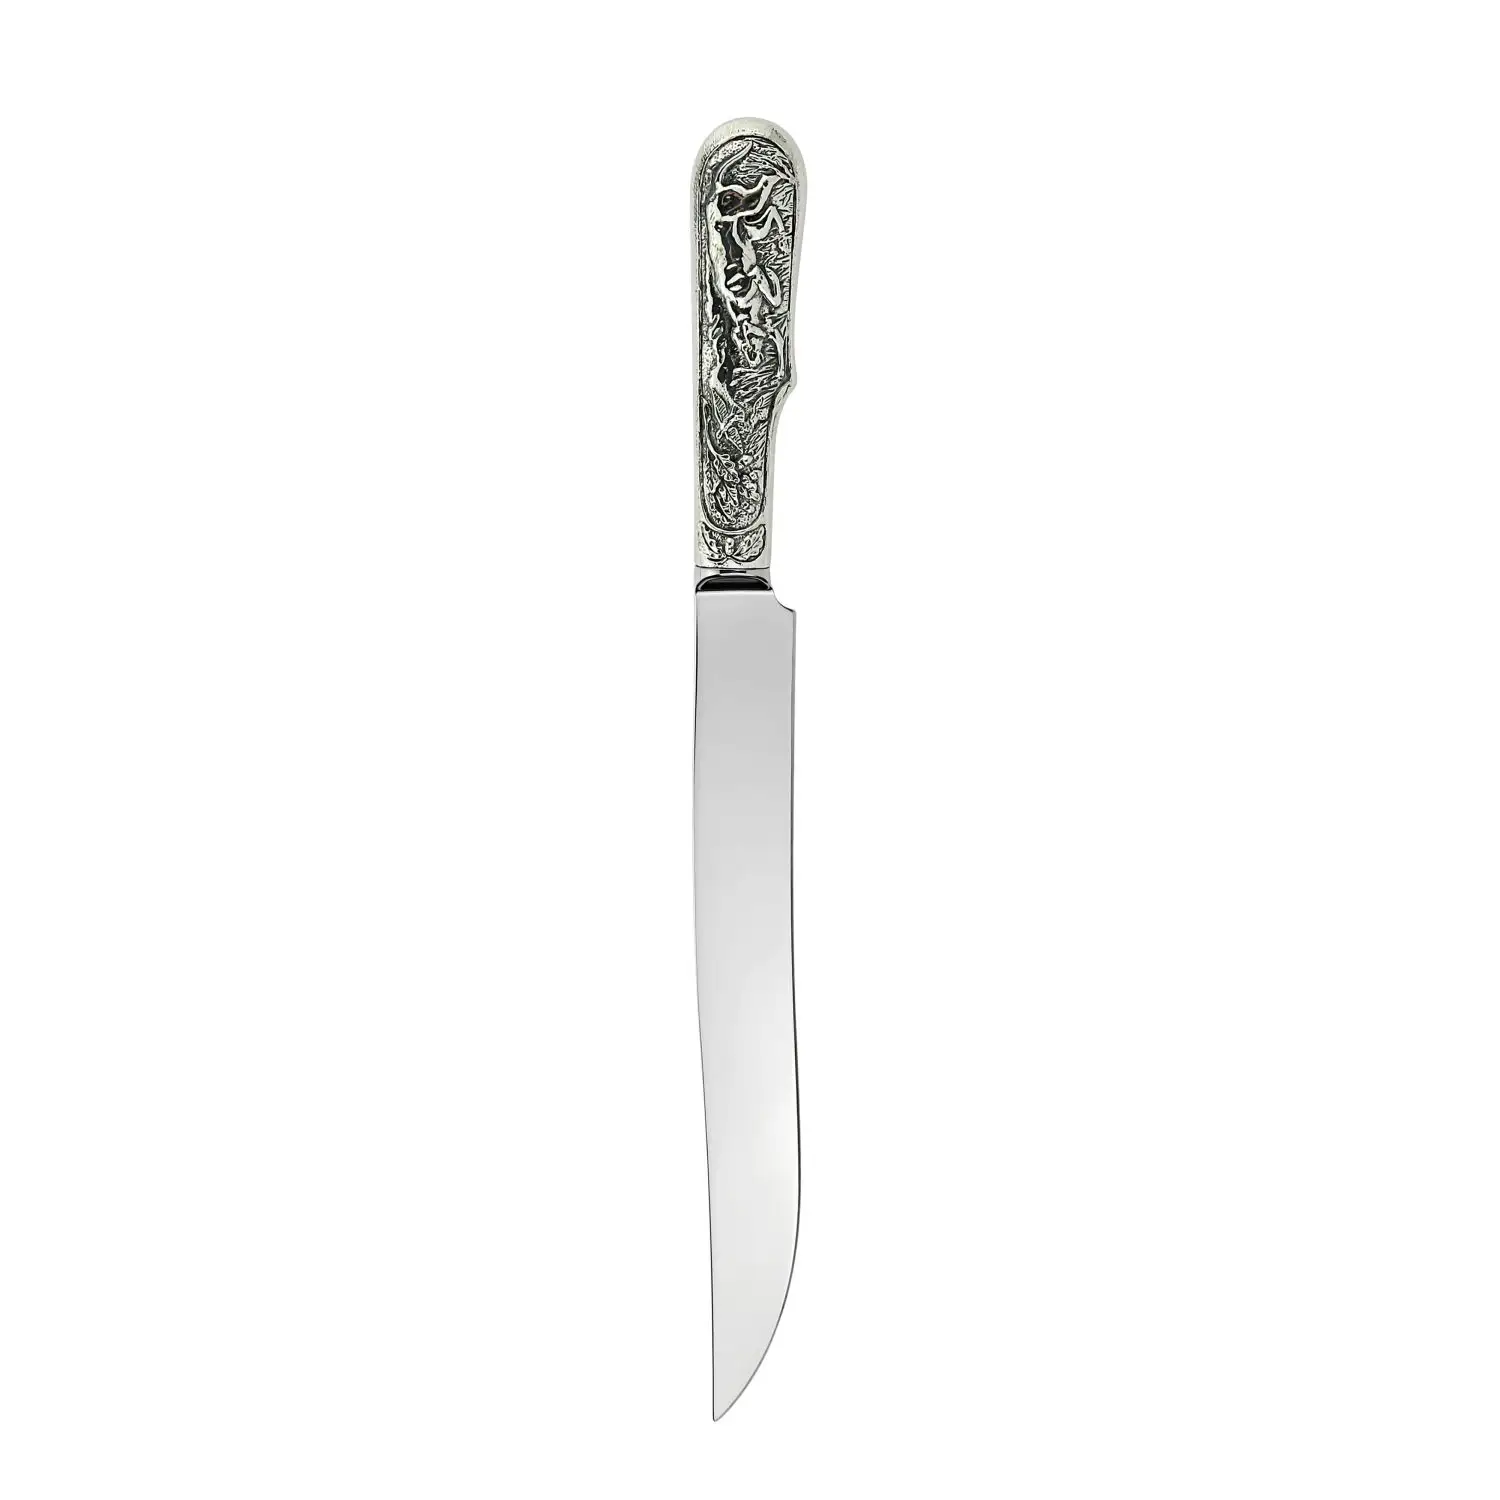 нож д мяса пойнтер l 220 3930 посереб полир с черн Нож для мяса Пойнтер L-220 посеребренный с чернением